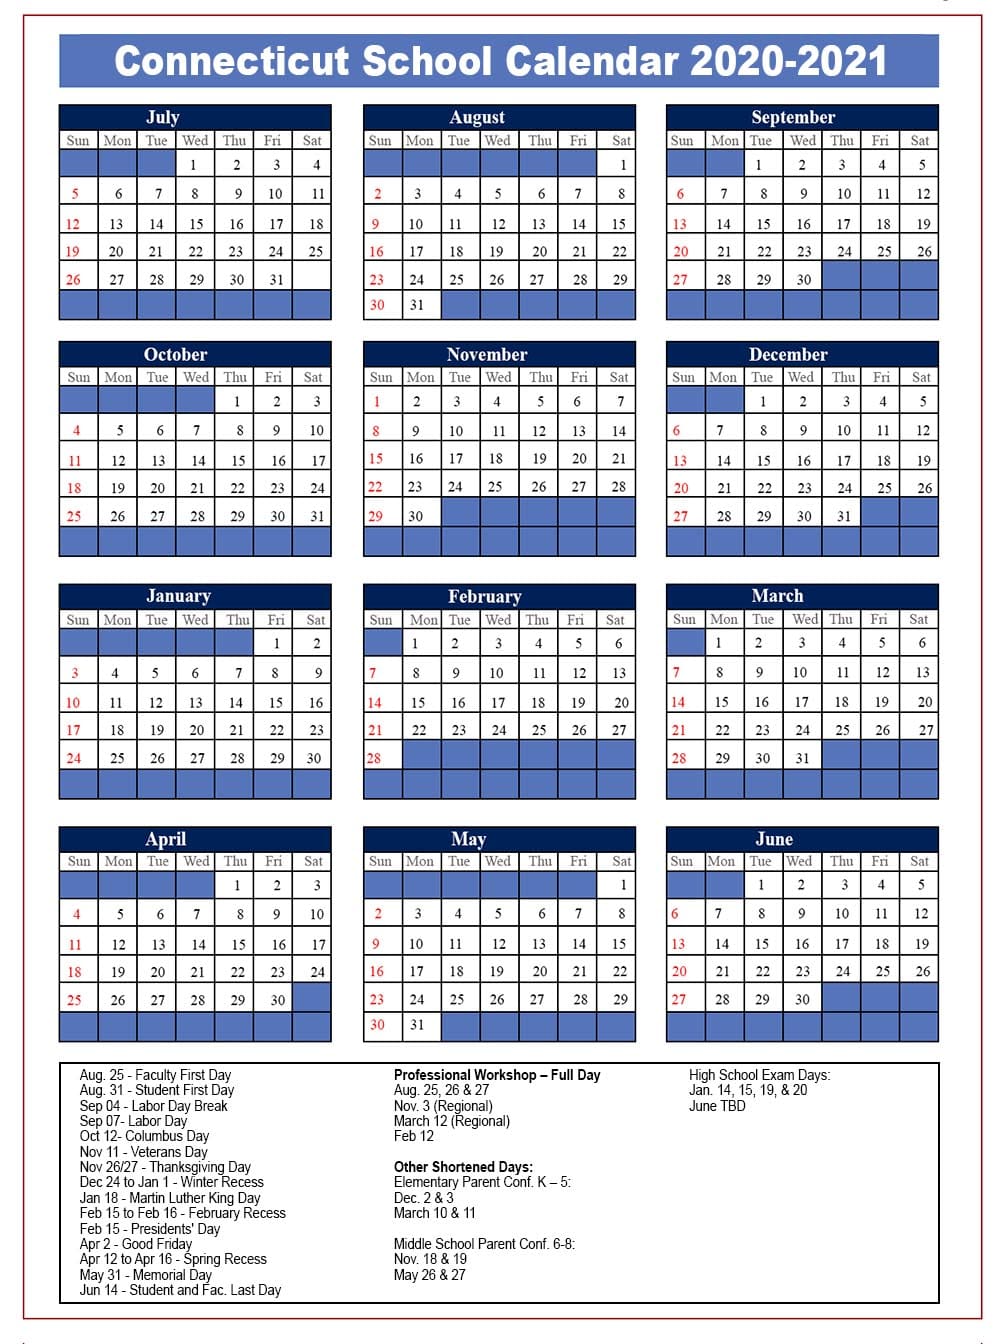 Connecticut School Calendar 2020